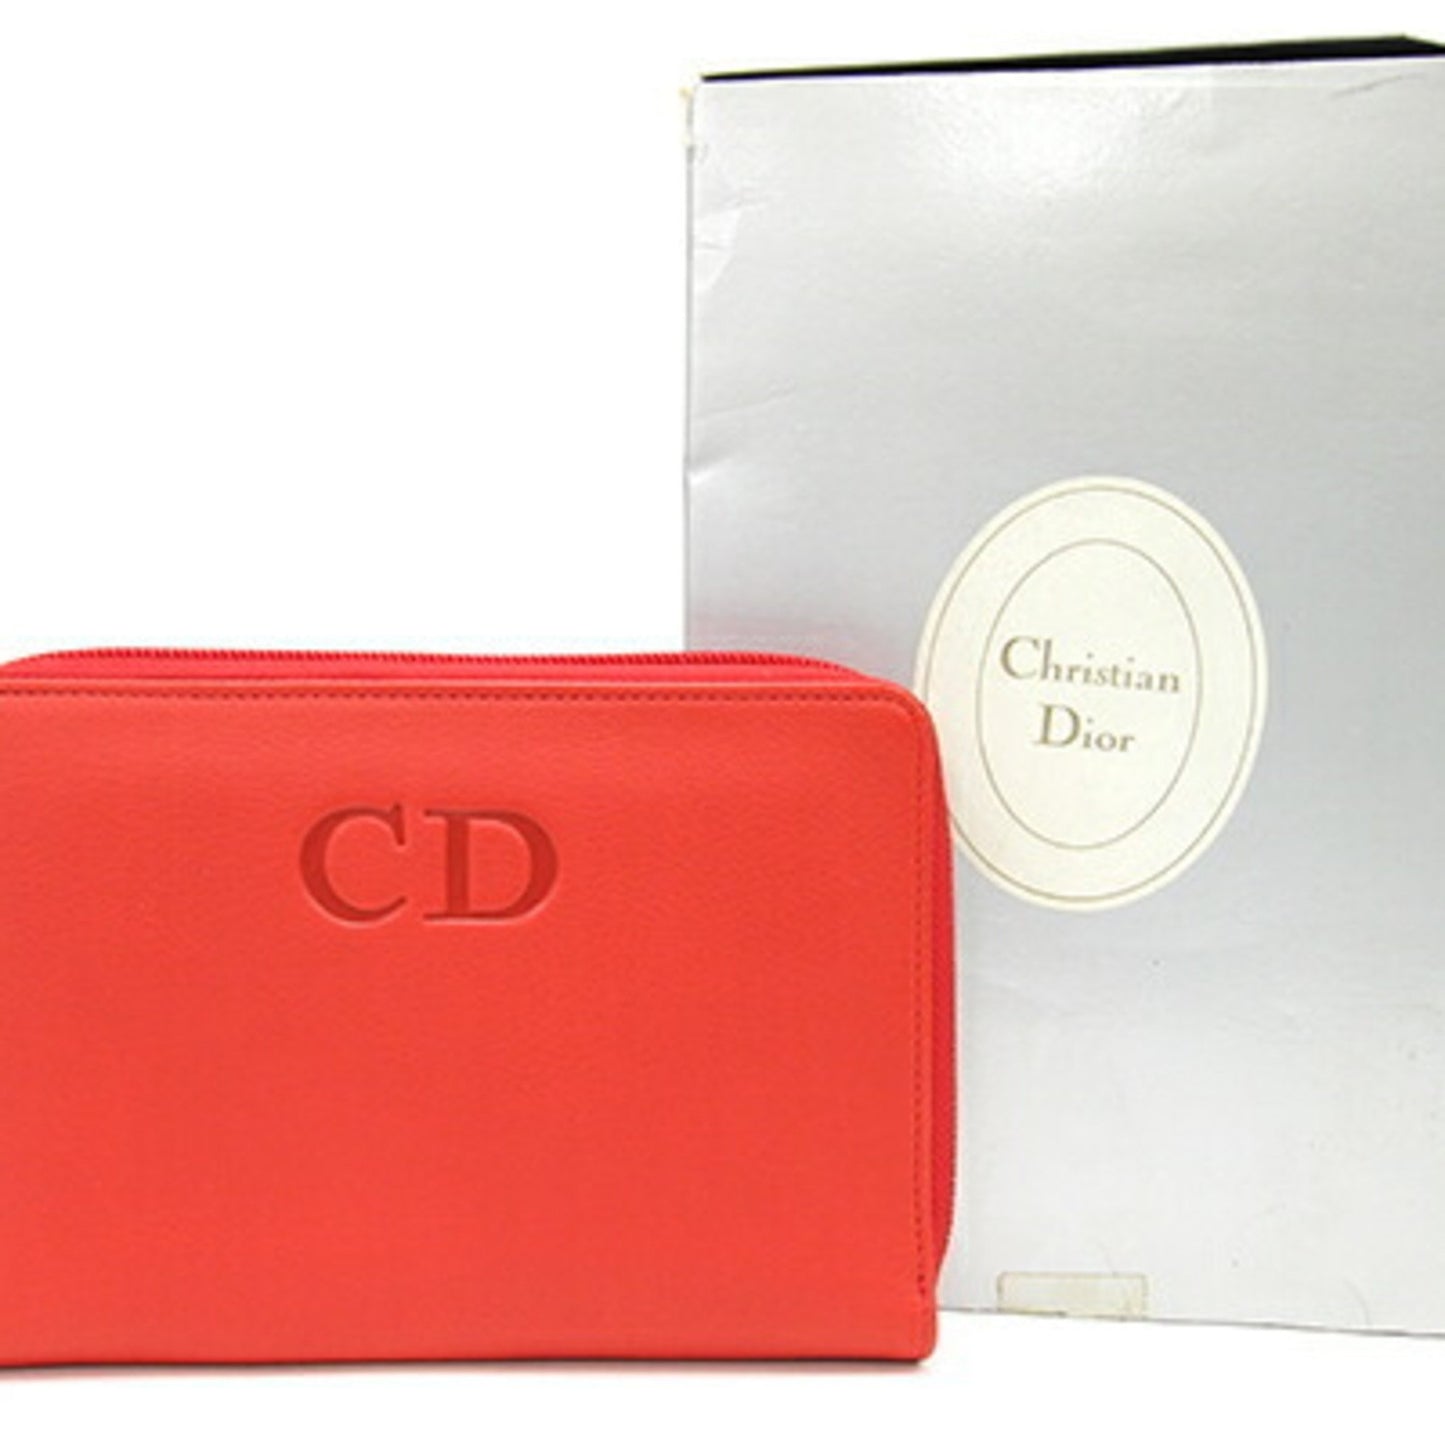 Dior CD